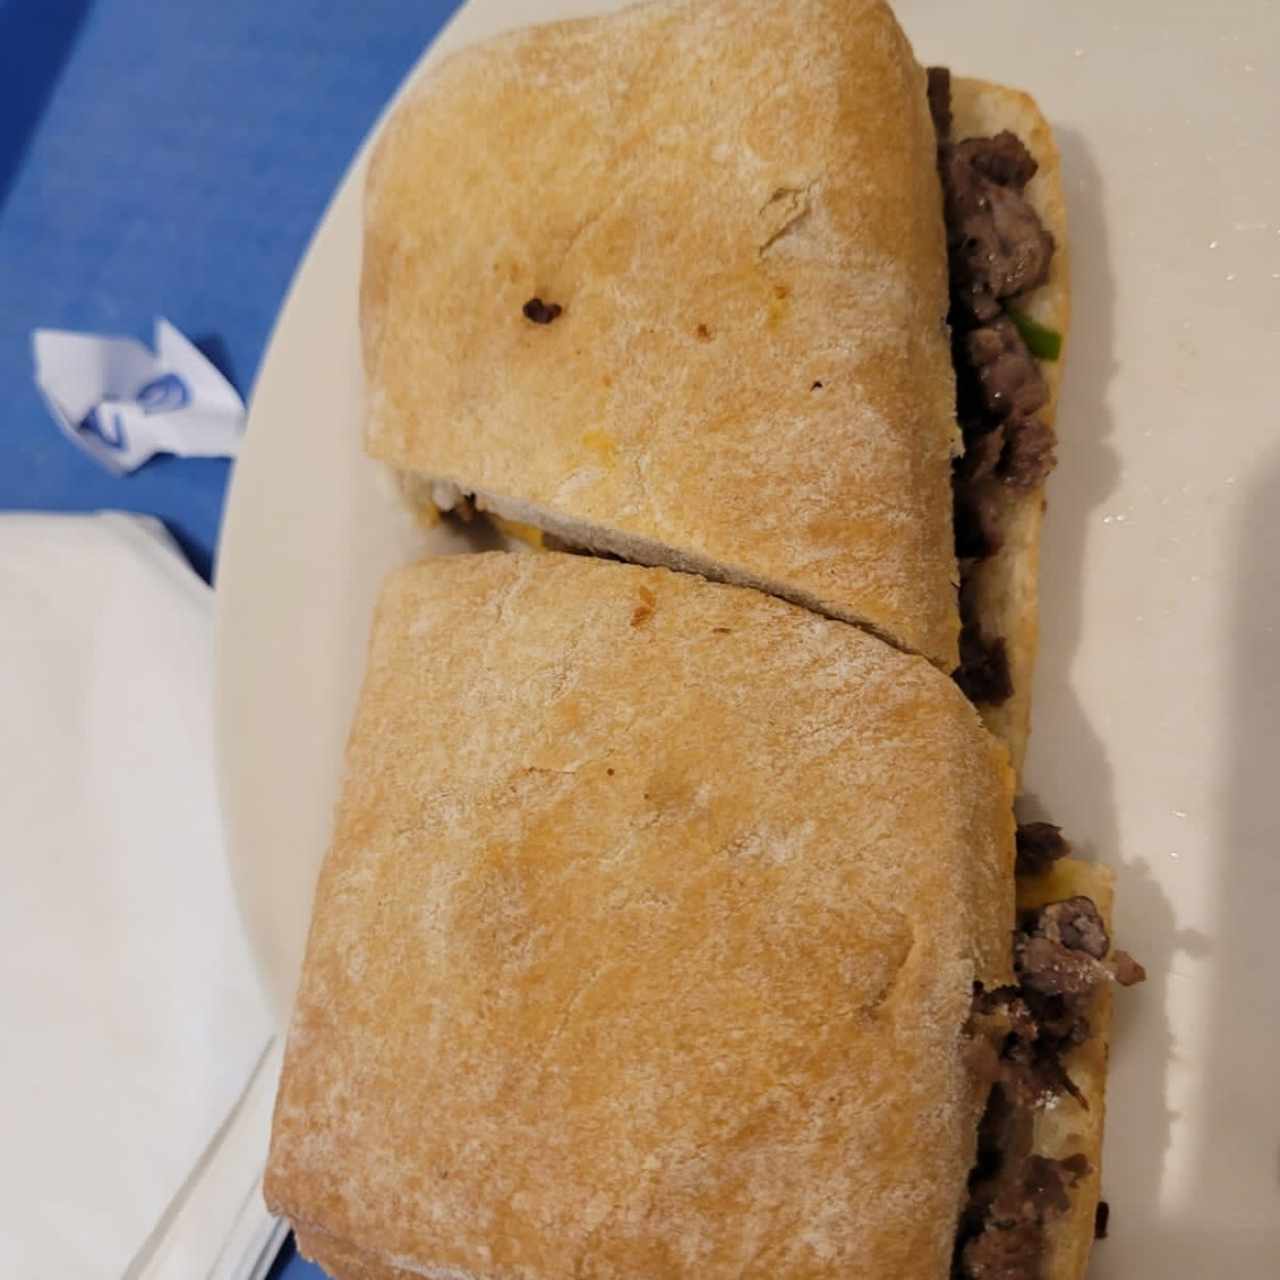 Niko’s Steak Sandwich